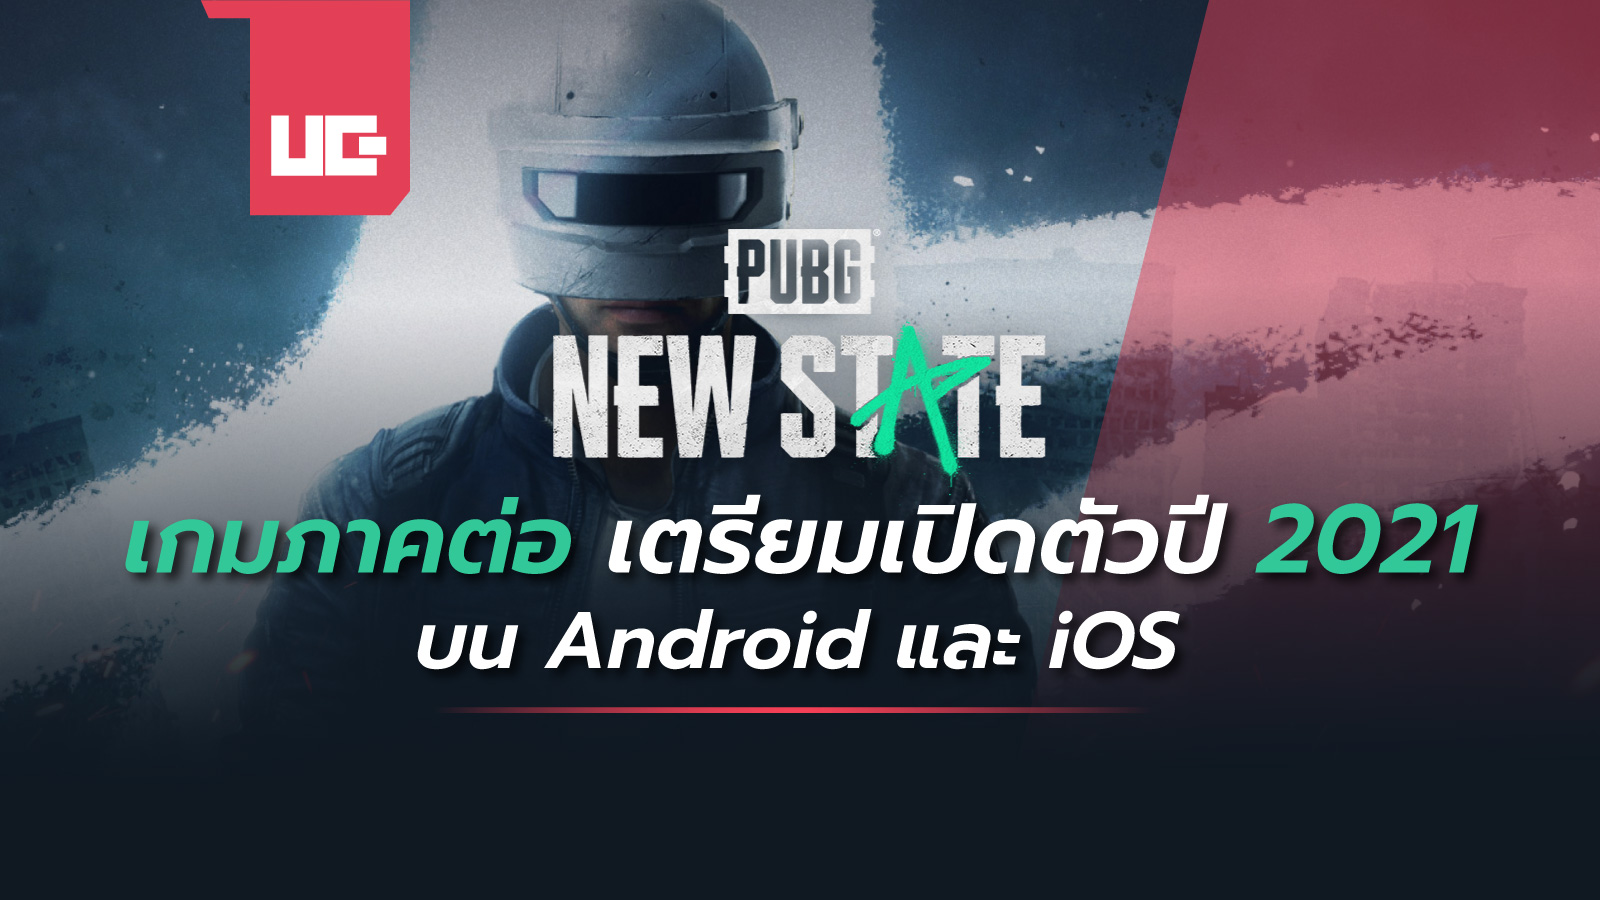 PUBG New State เกมภาคต่อ เตรียมเปิดตัวปี 2021 บน Android และ iOS